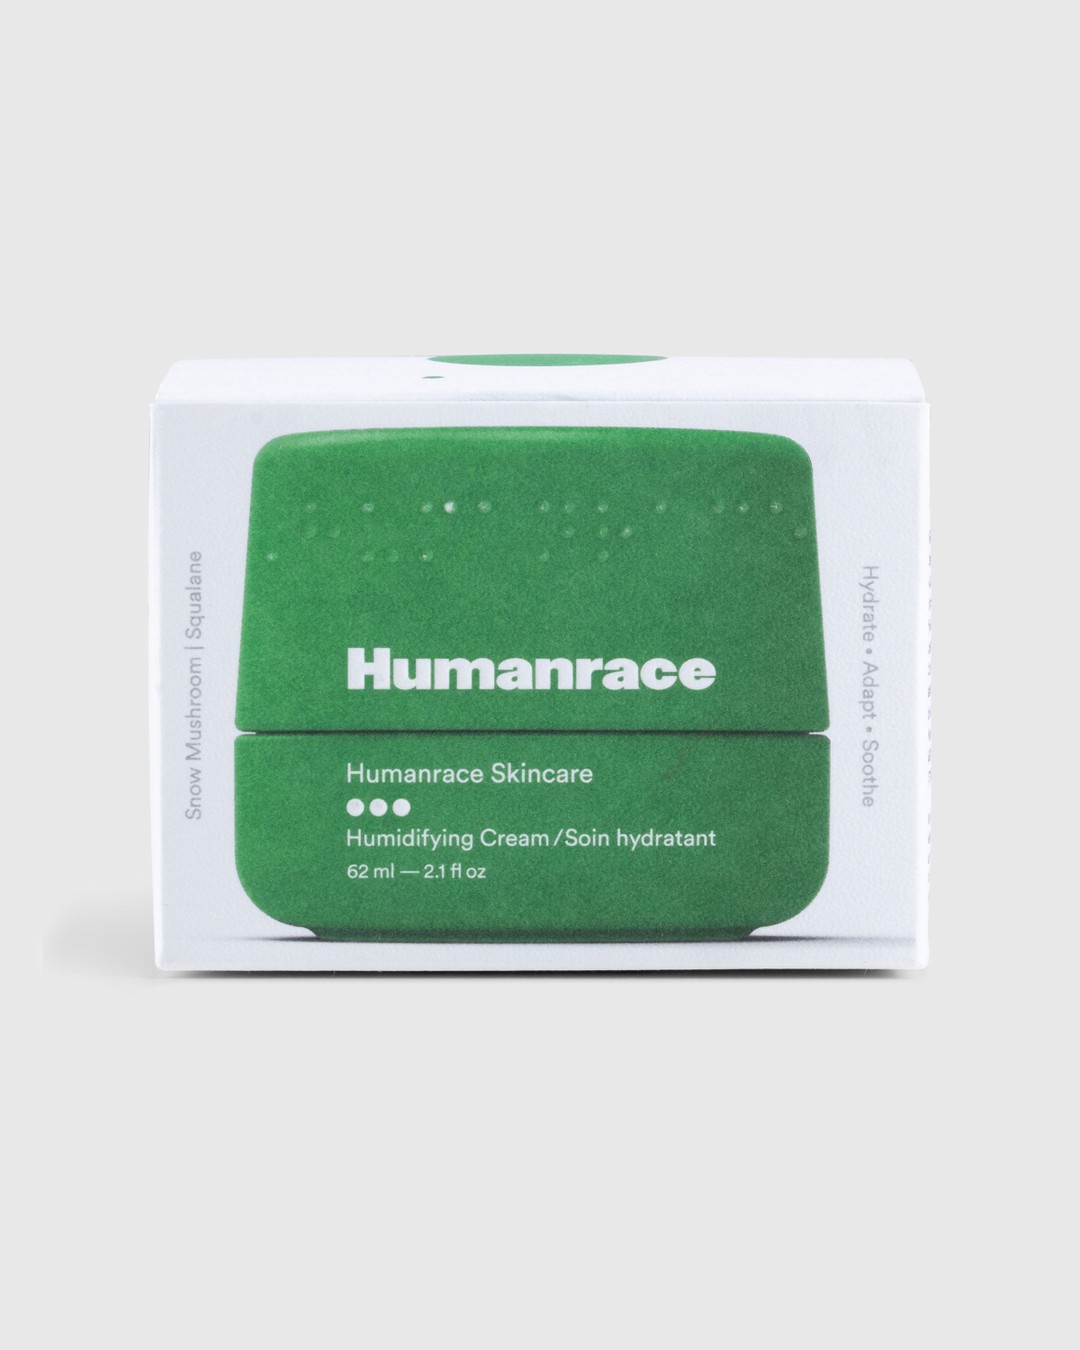 Humanrace – Humidifying Face Cream - Face - Green - Image 2